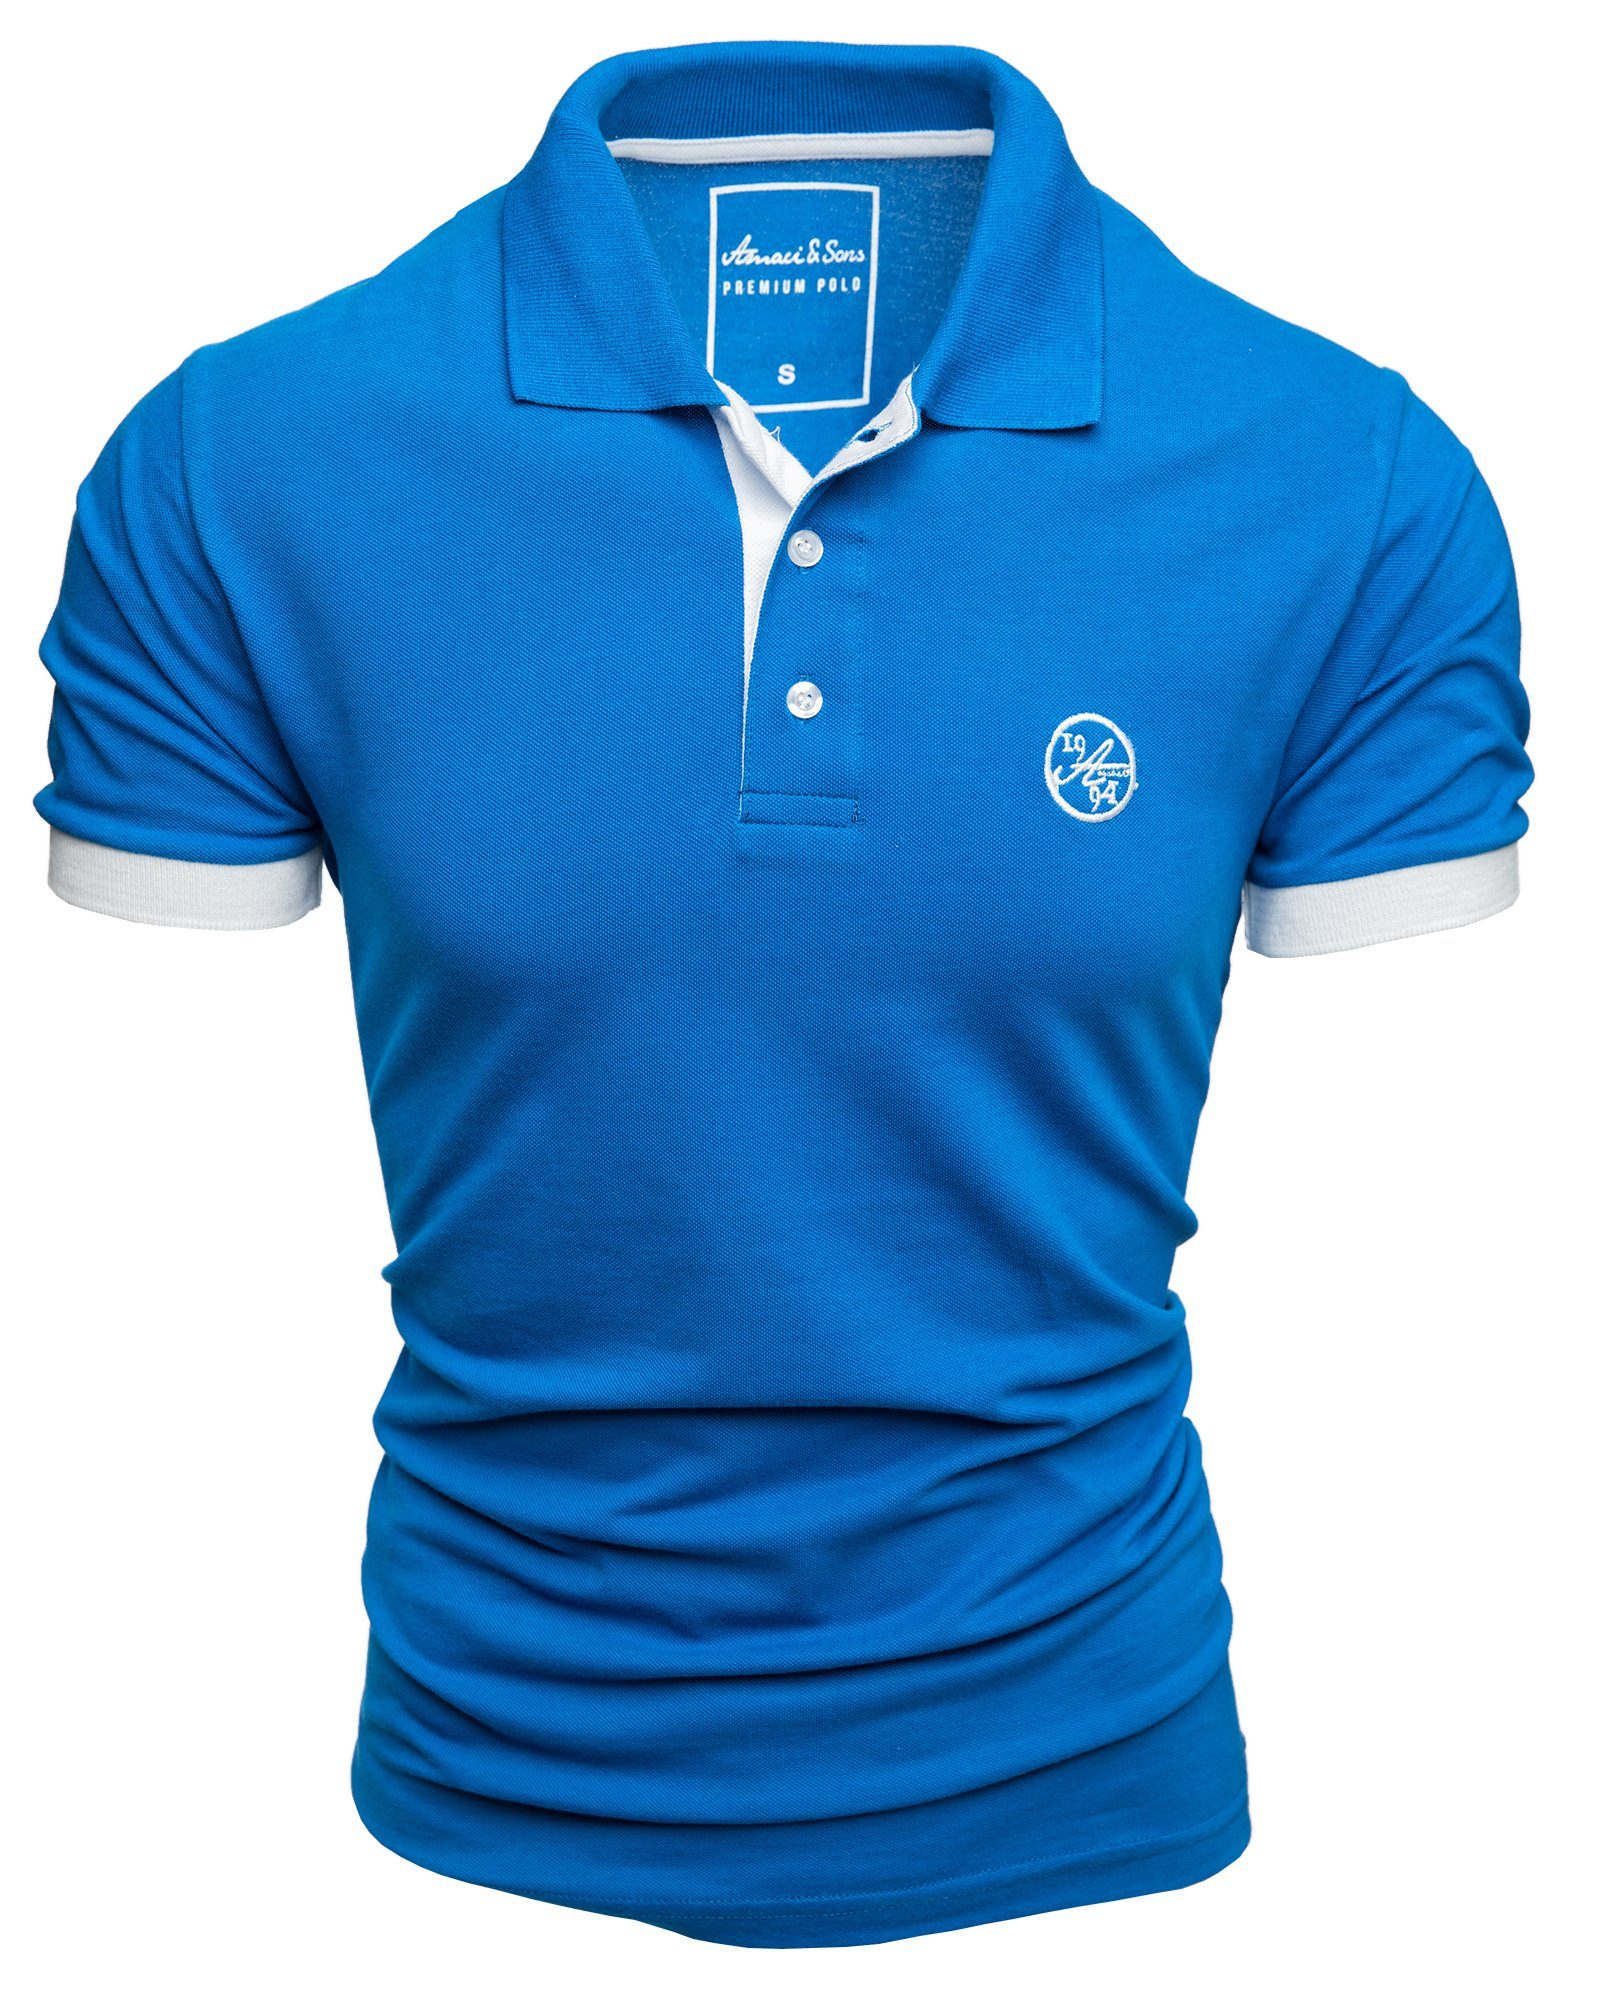 Basic Polo Royalblau/Weiß Poloshirt MEMPHIS Shirt Kontrast Amaci&Sons